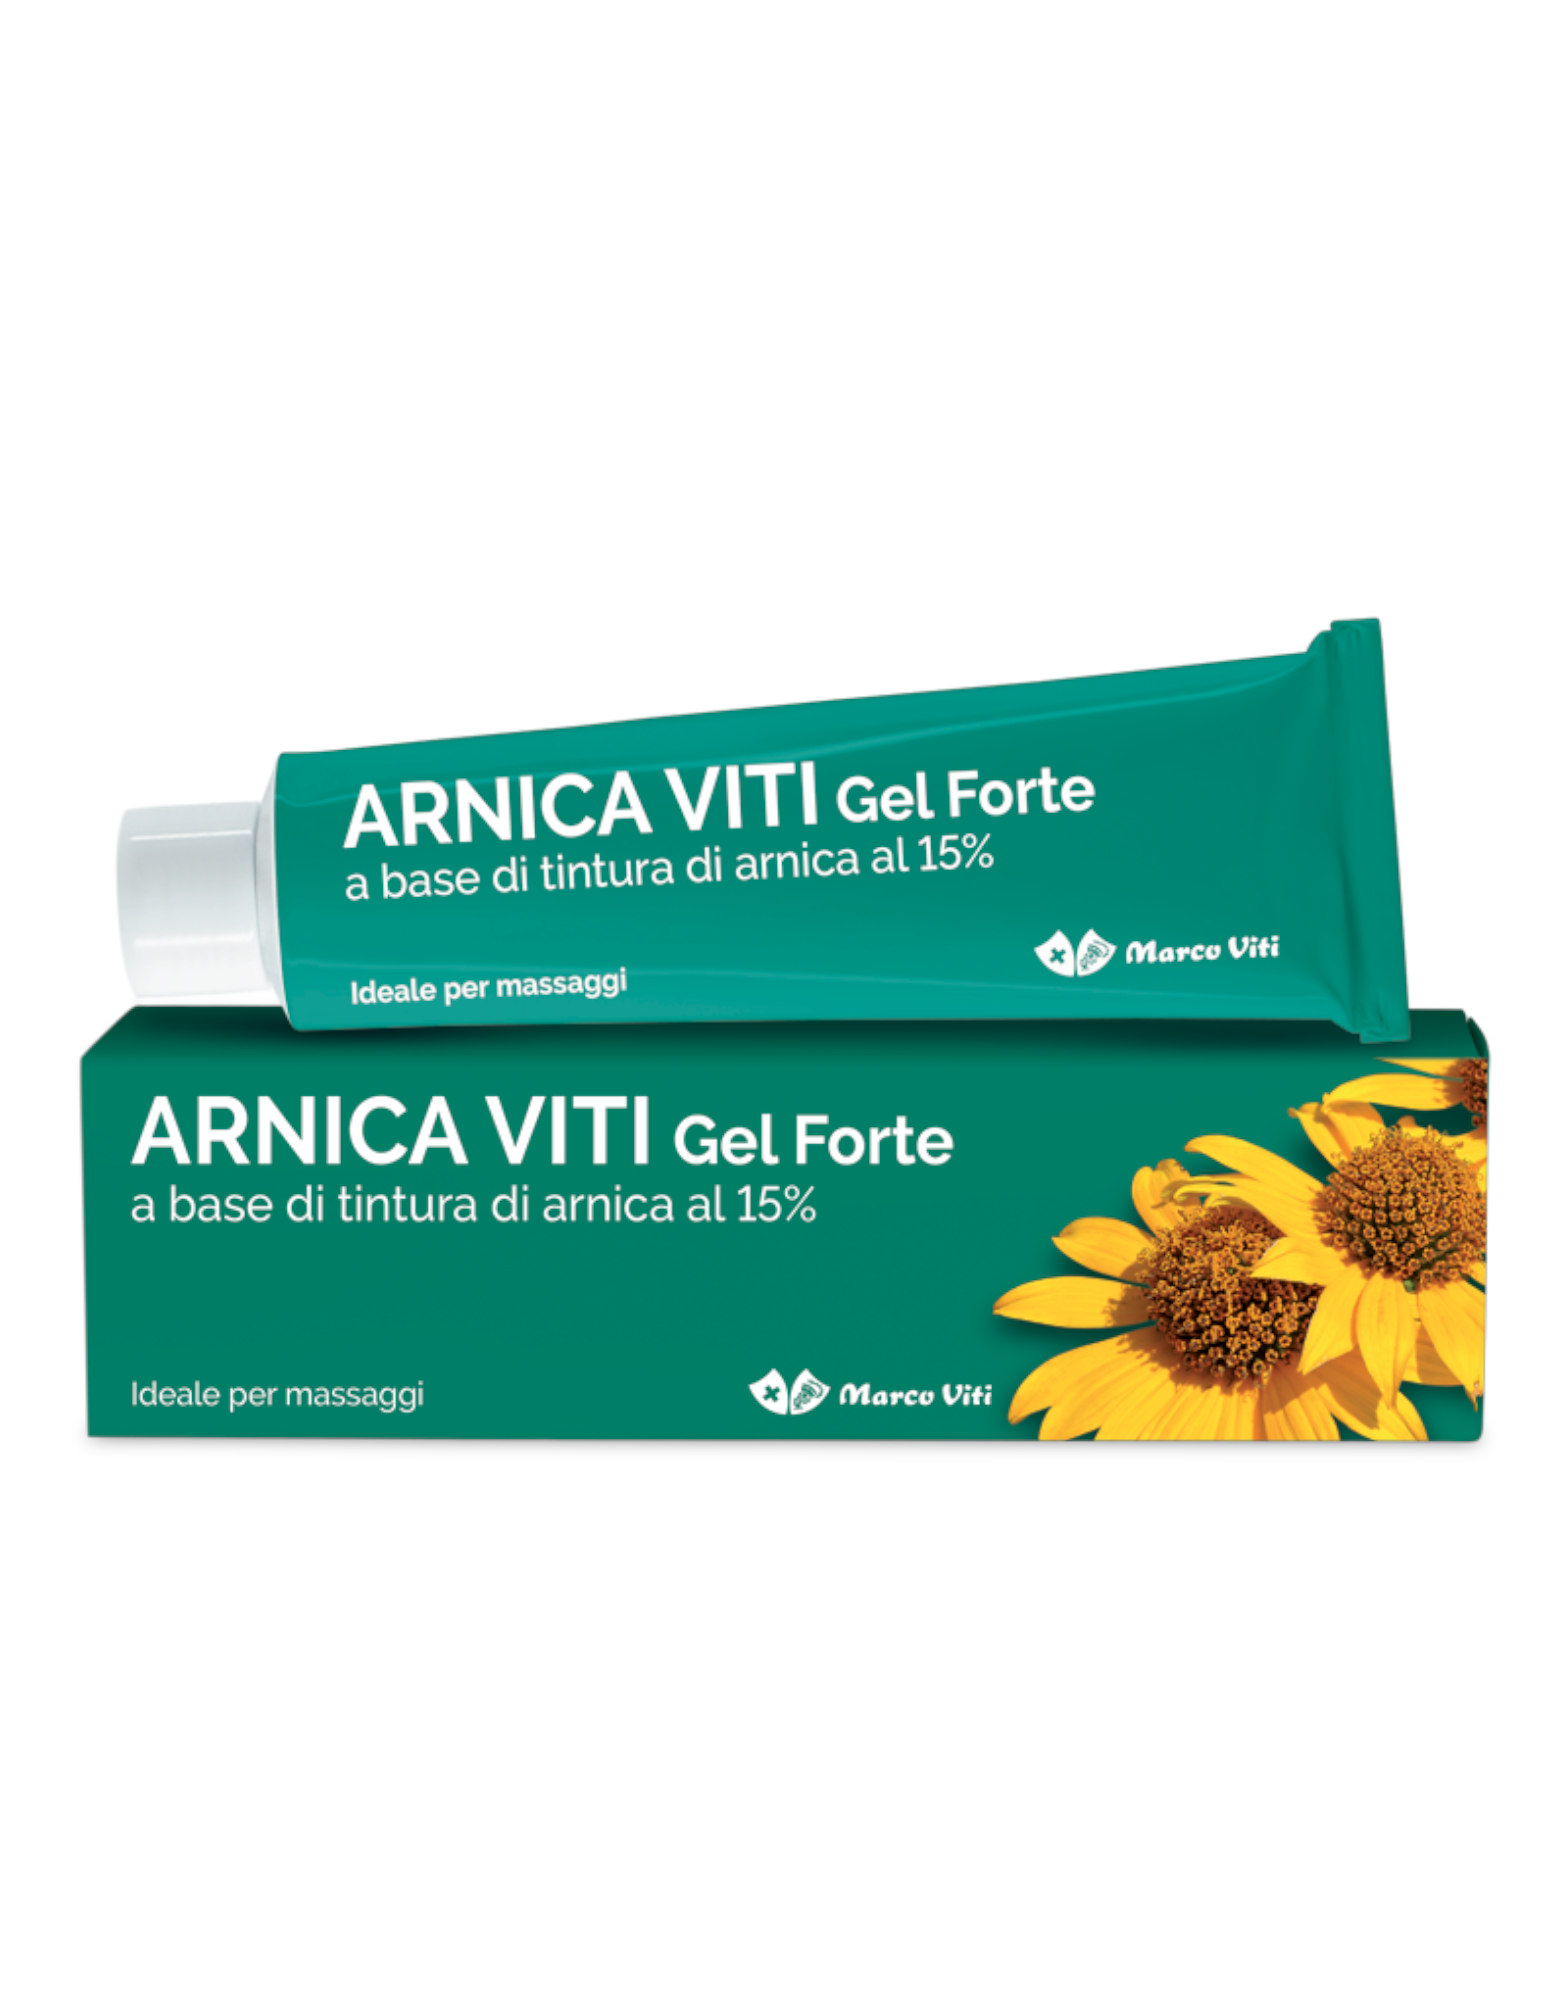 Arnica Viti Gel Forte by Marco viti, 100ml 